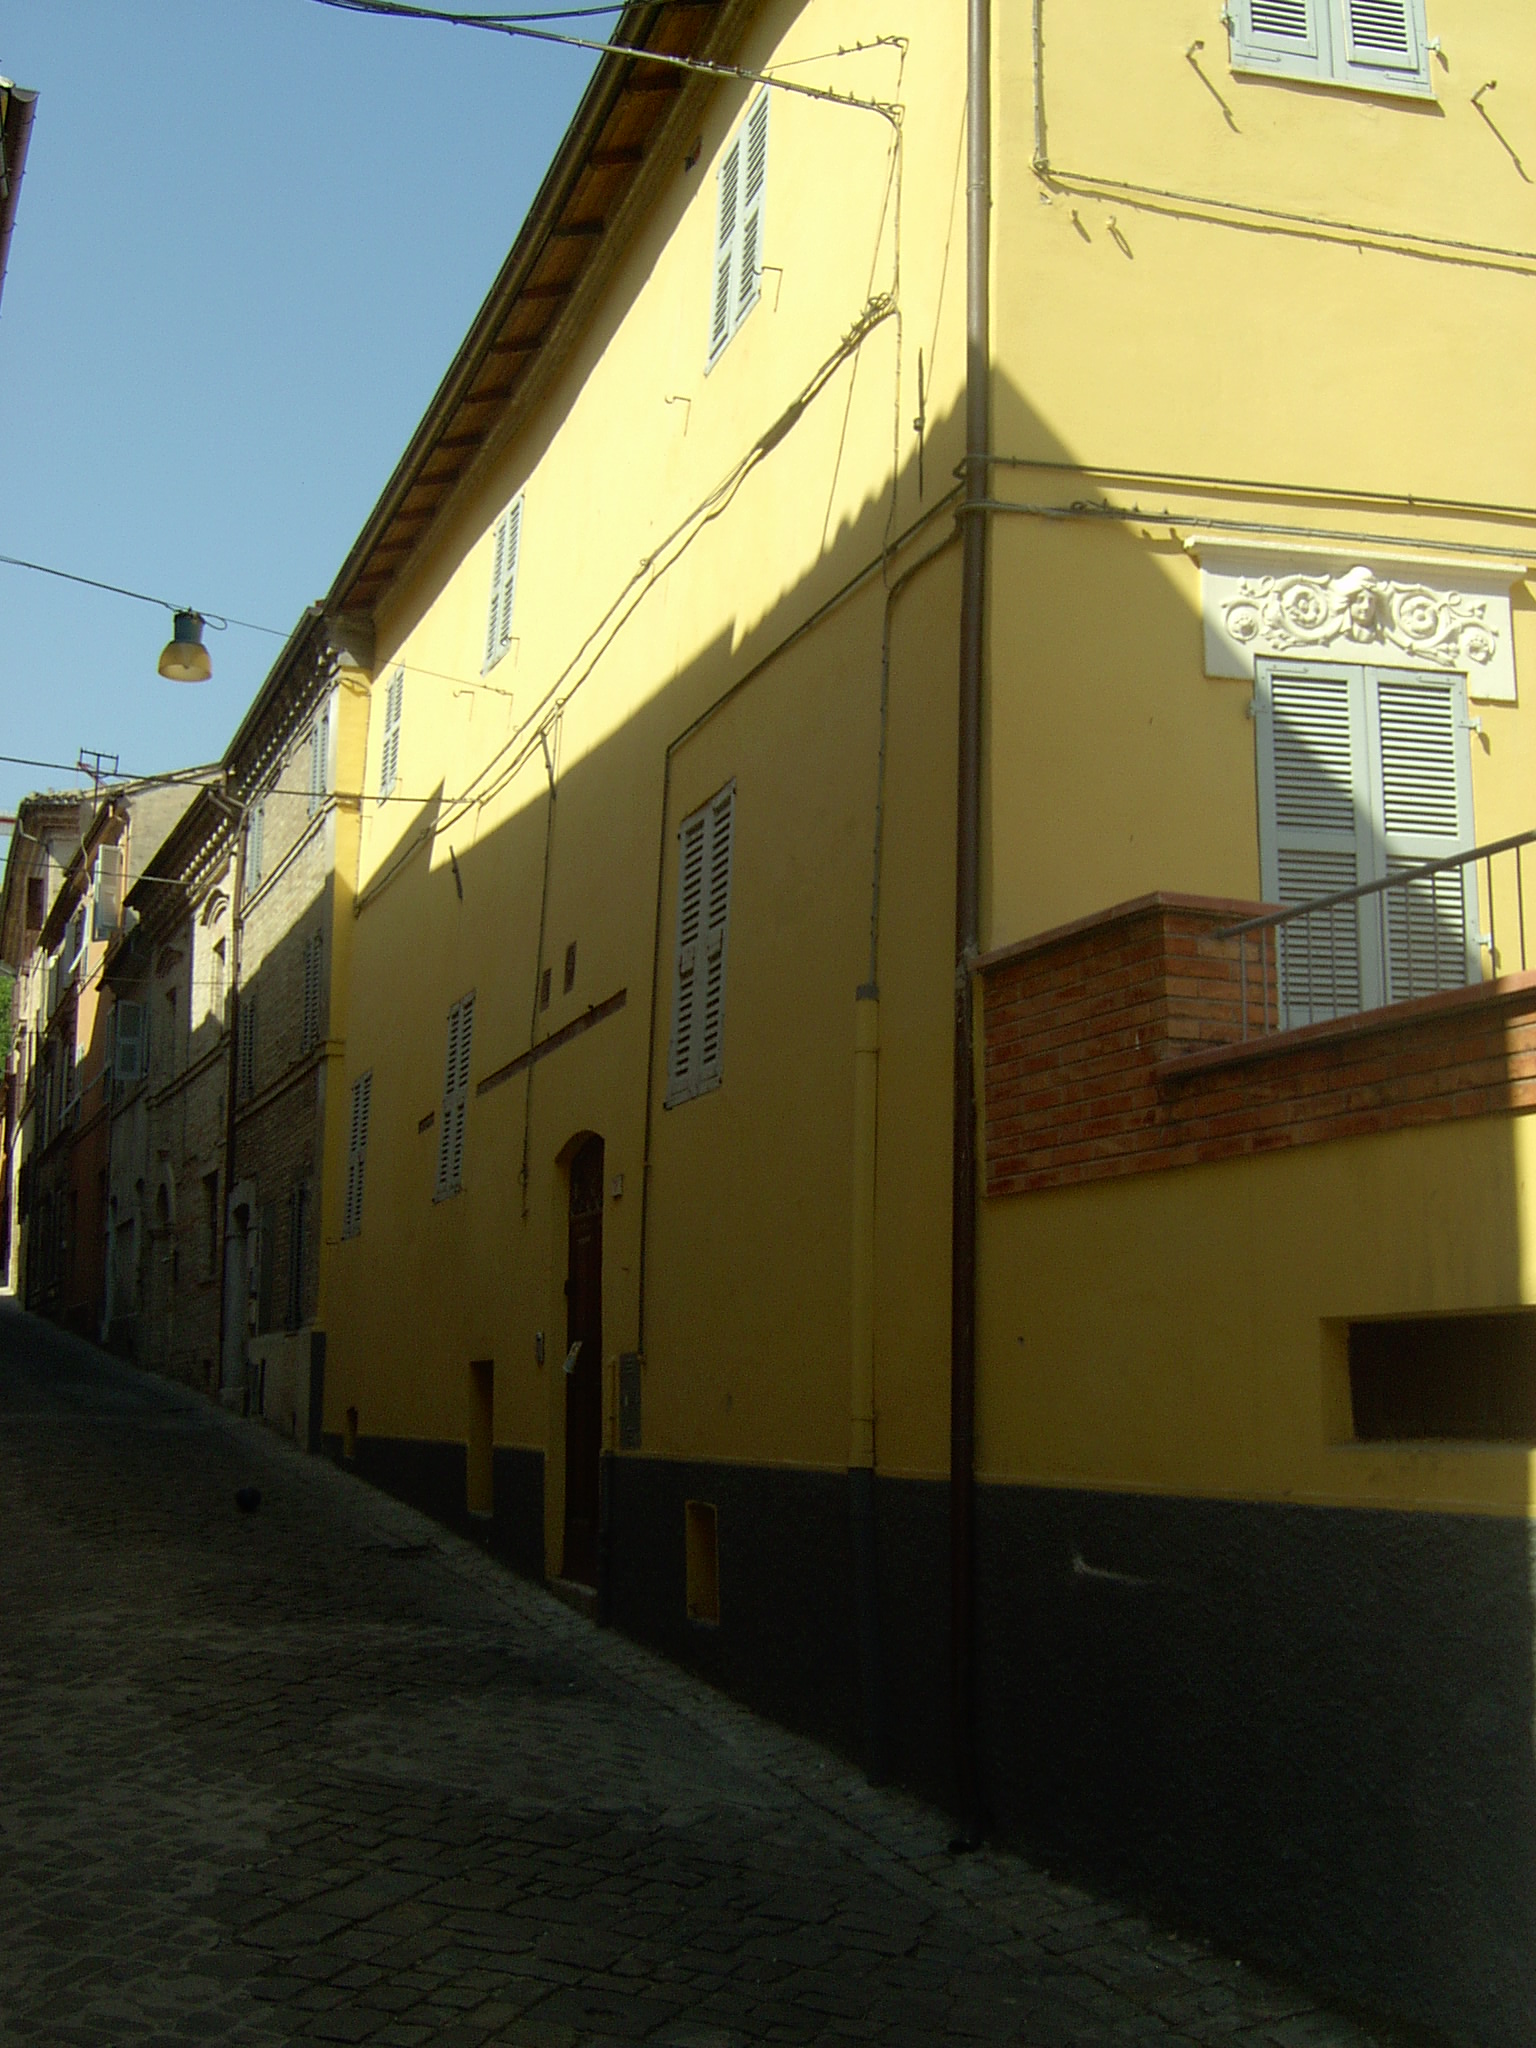 Palazzo Natali (palazzo, signorile) - Corridonia (MC) 